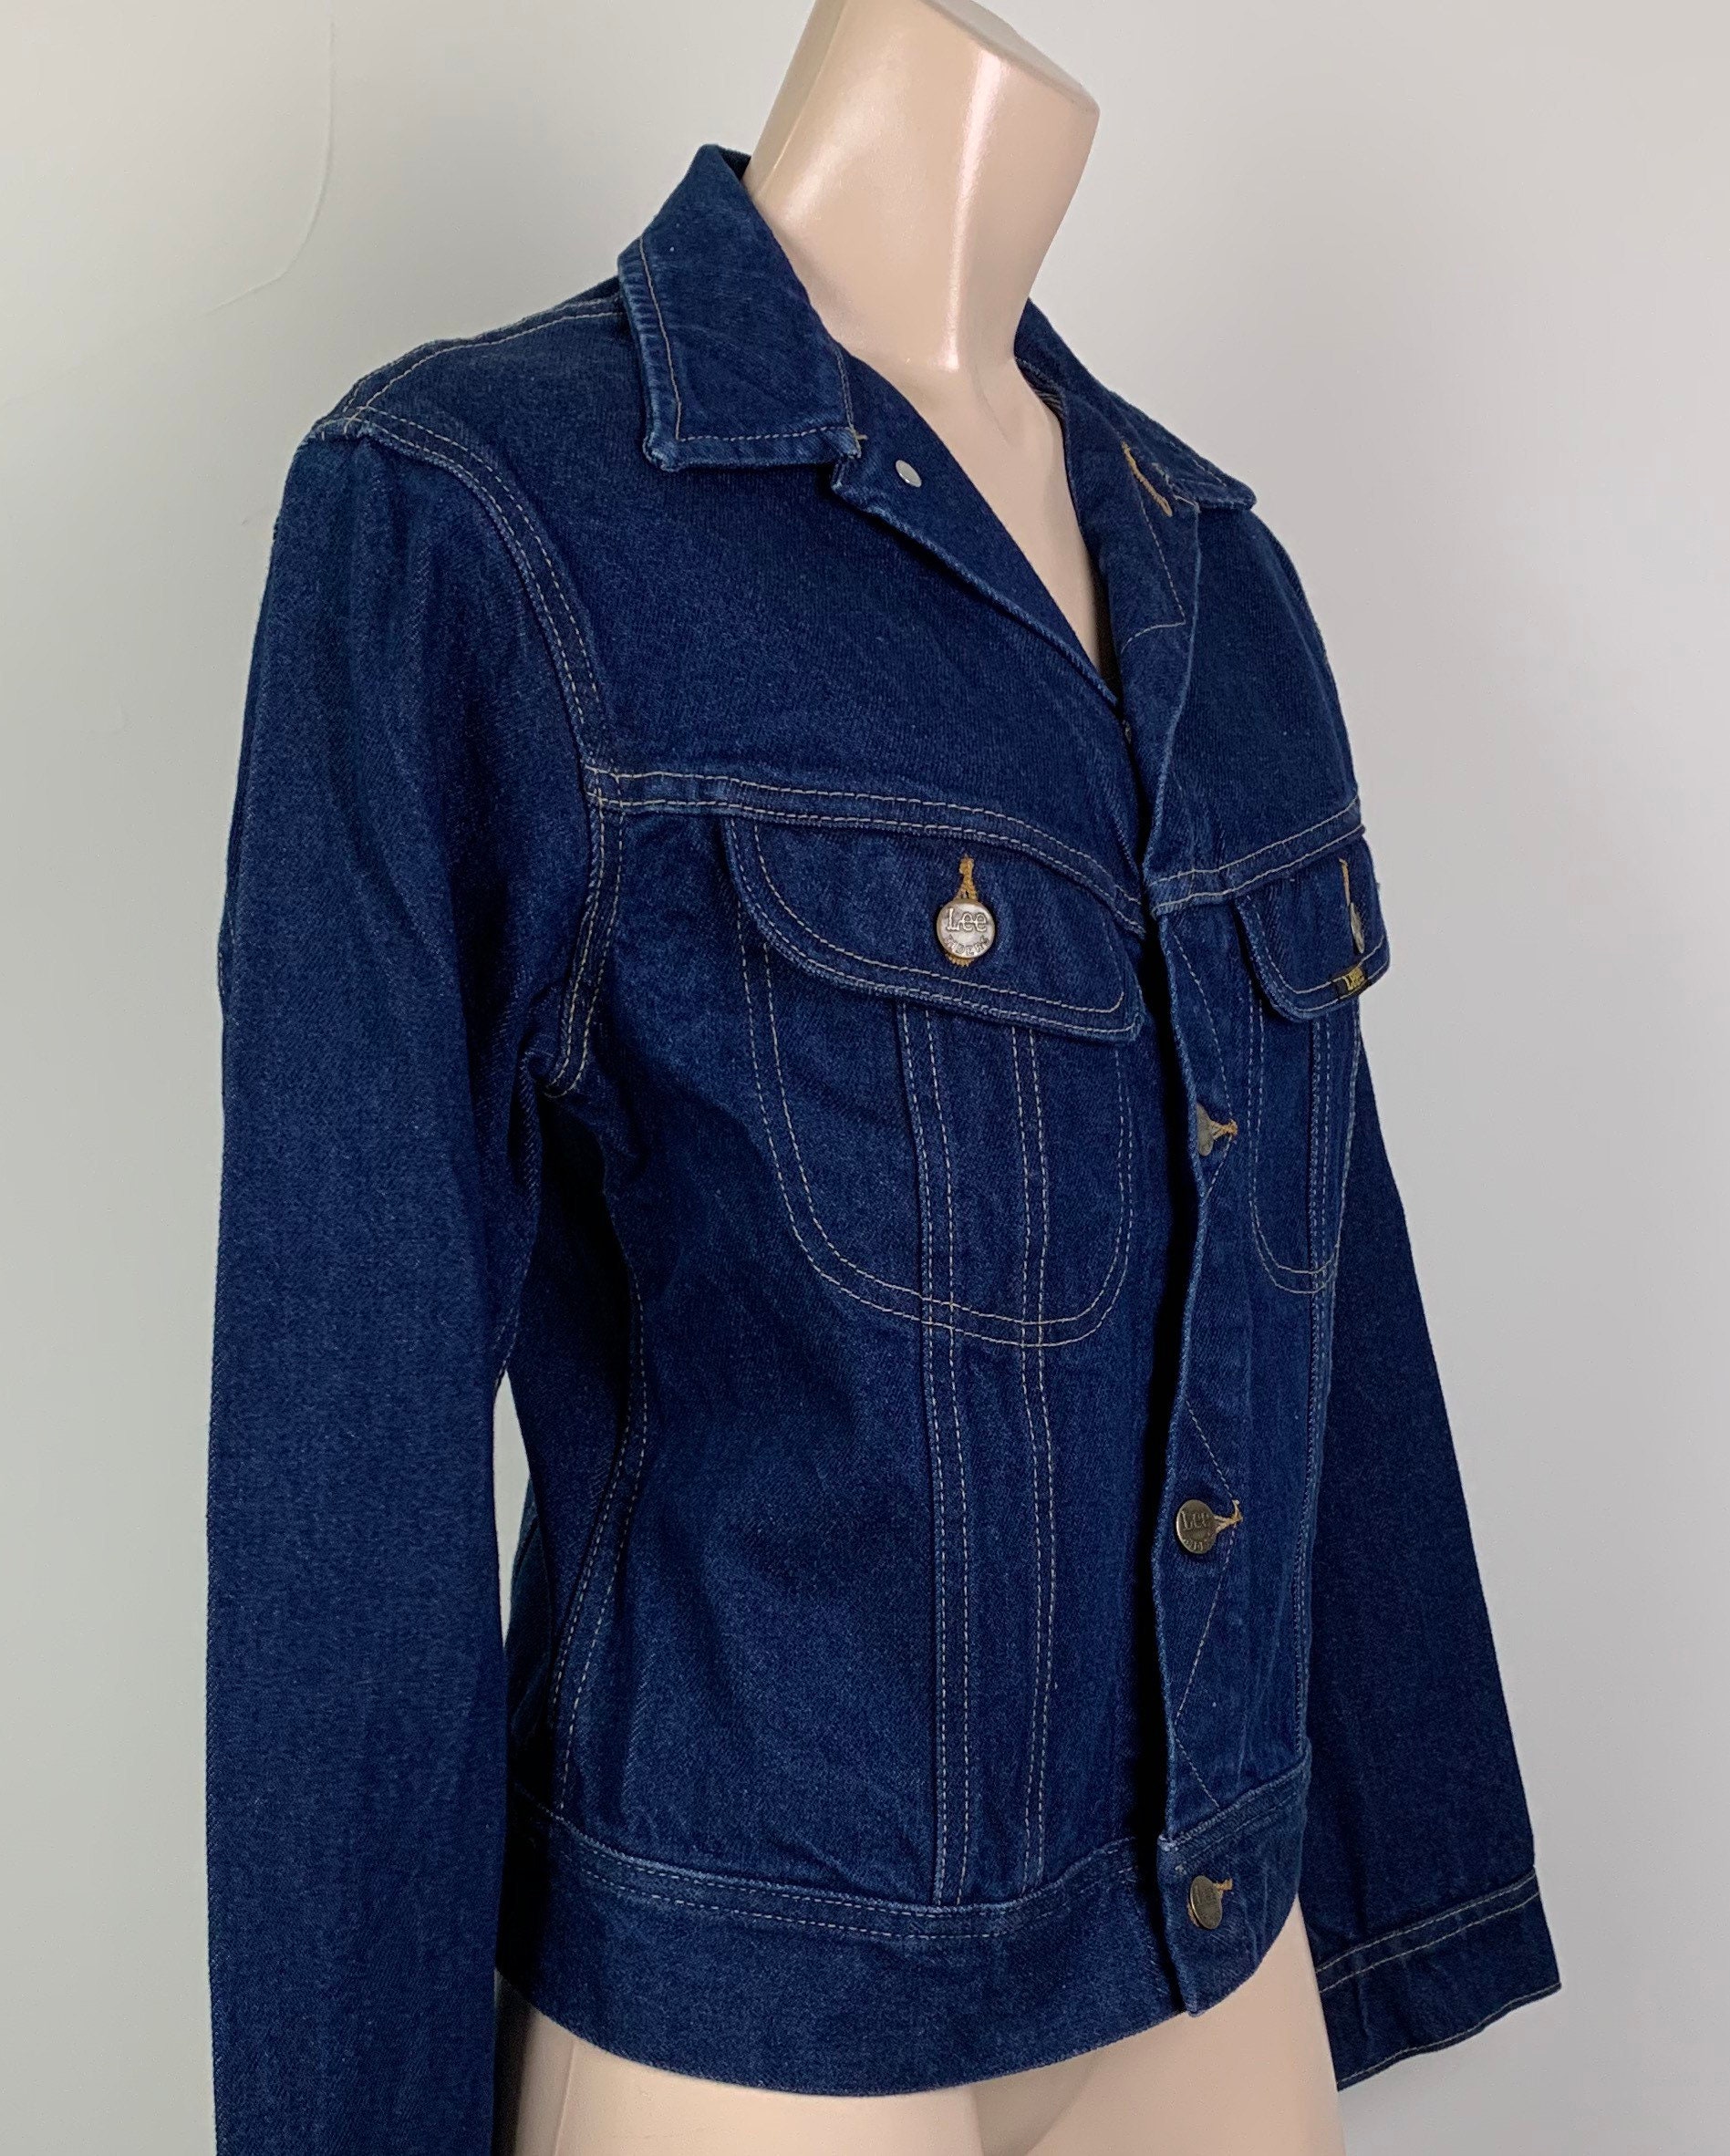 Vintage 70s LEE Denim Jacket Jean Jacket | Etsy